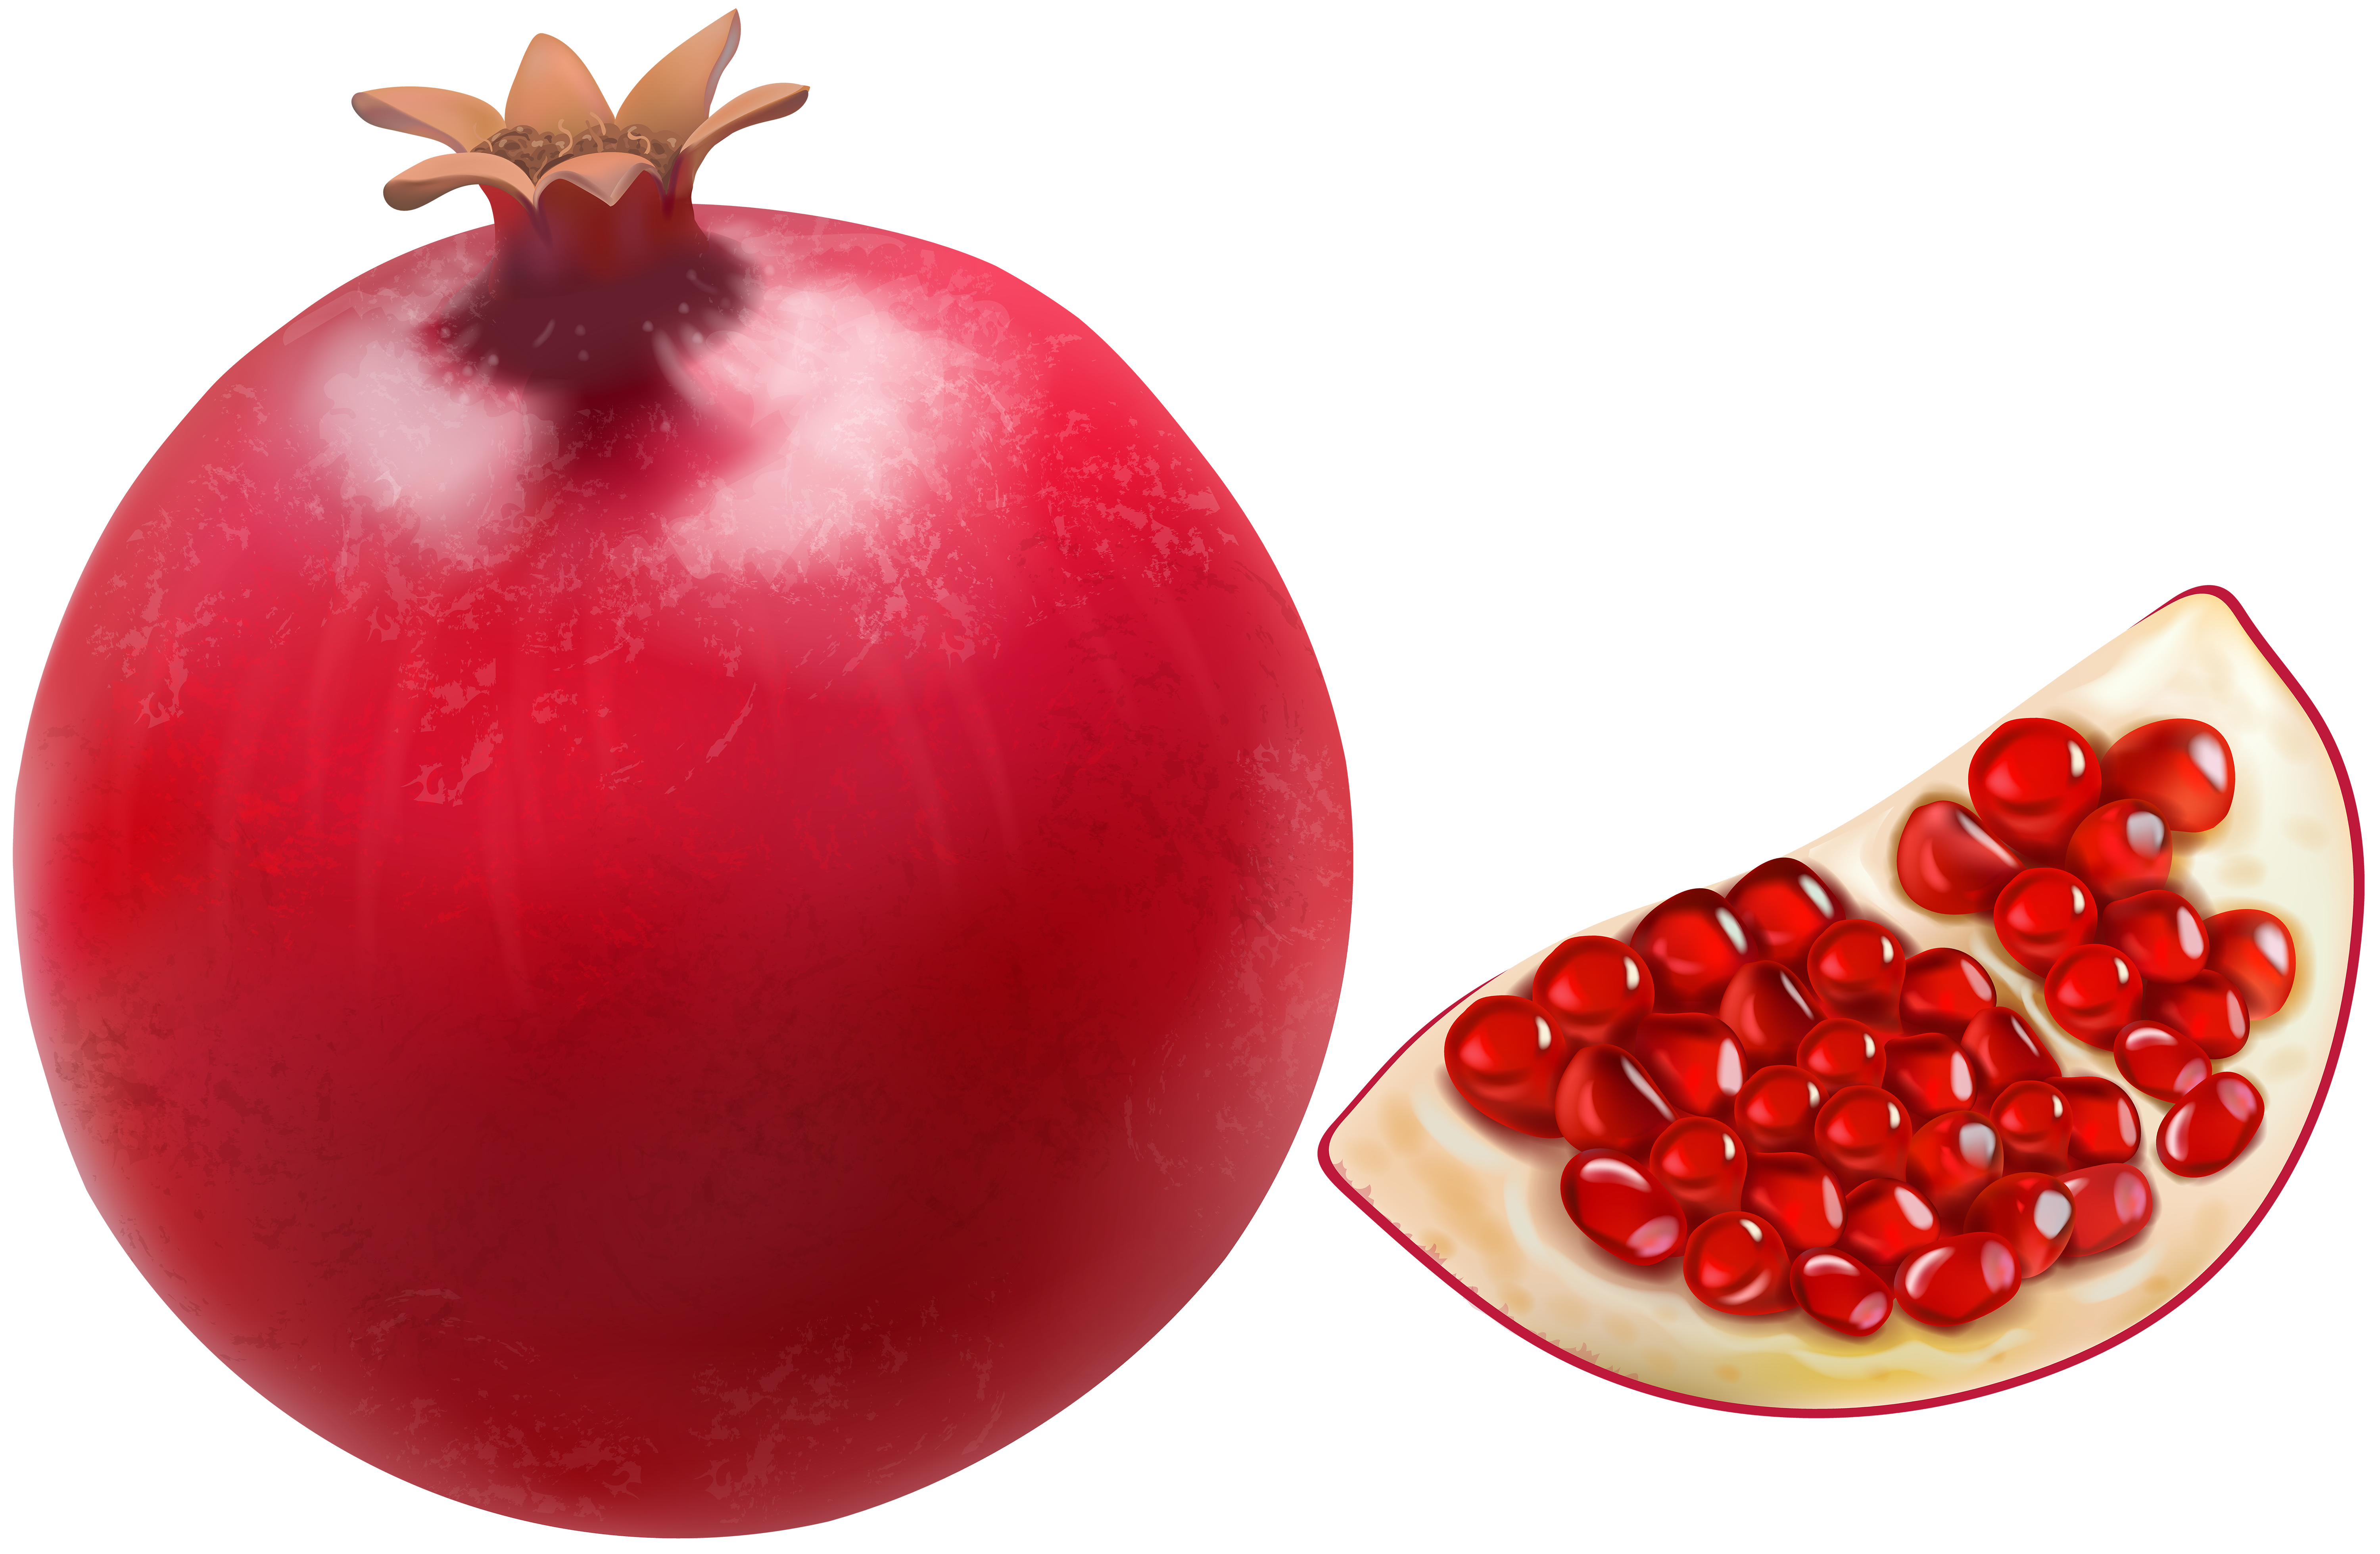 pomegranate clipart